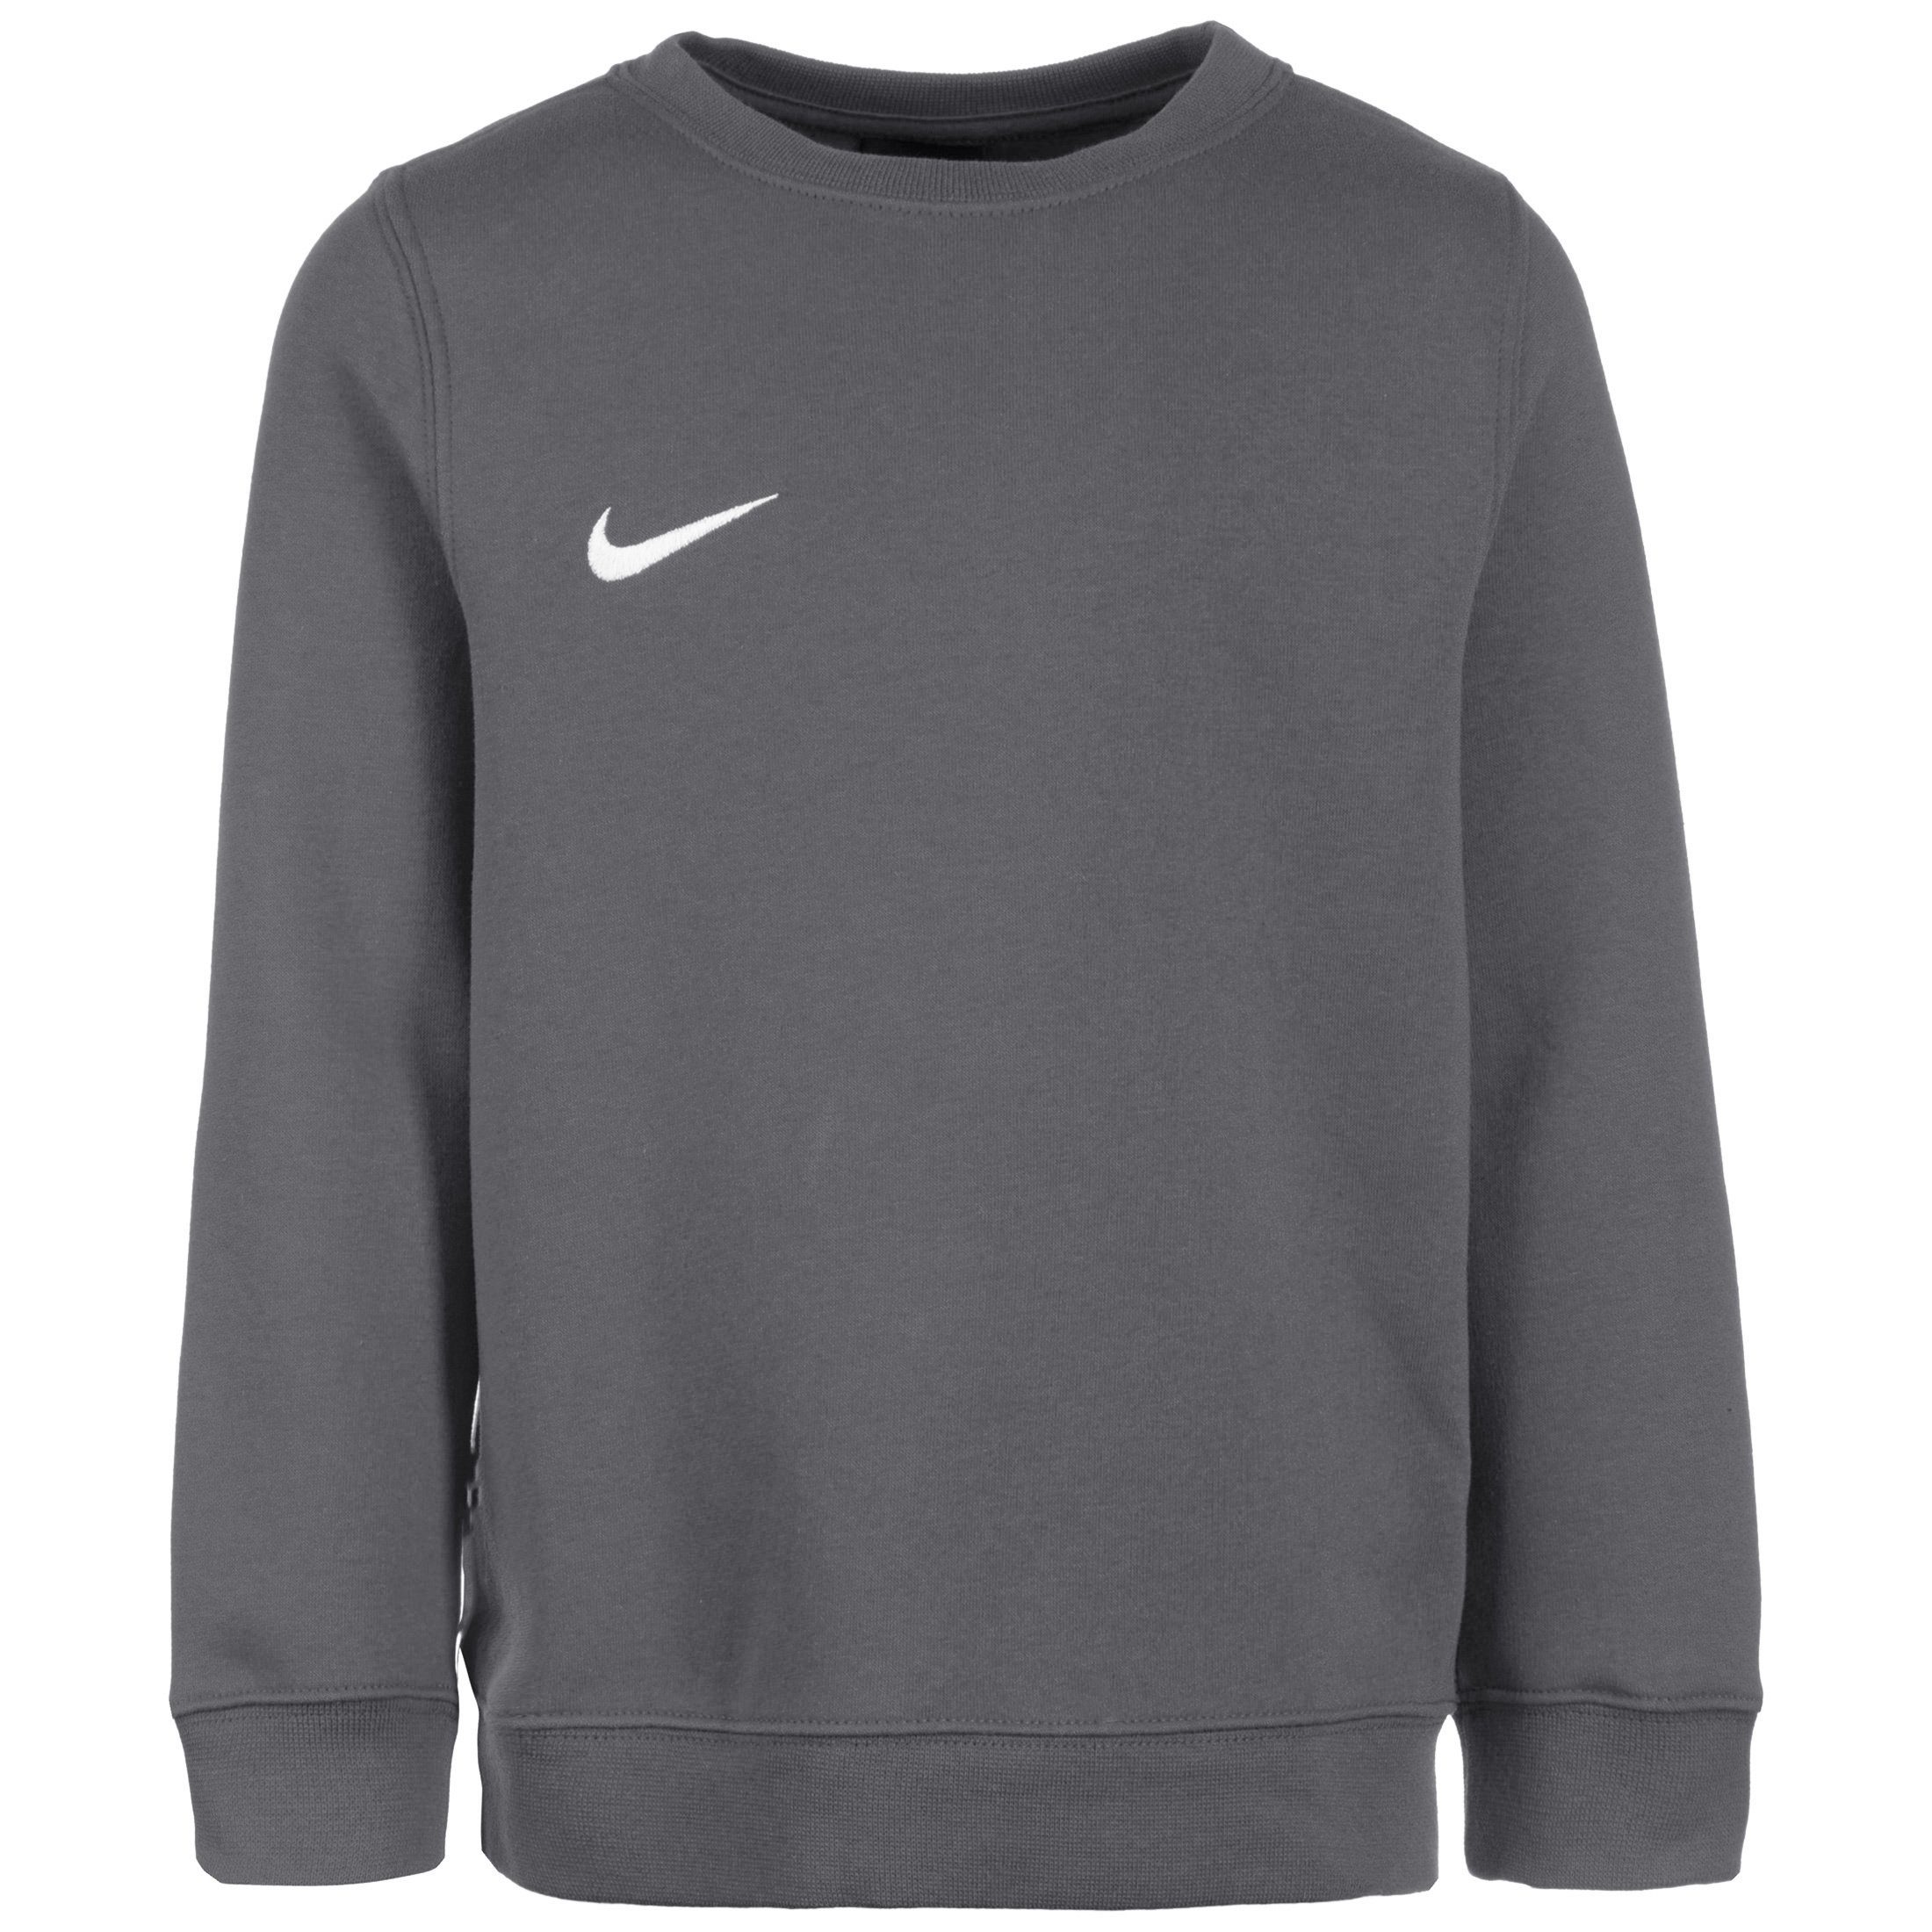 Nike Sweatshirt »Club19 Crew Fleece Tm«, Nike Club 19 Teamsport-Kollektion  online kaufen | OTTO